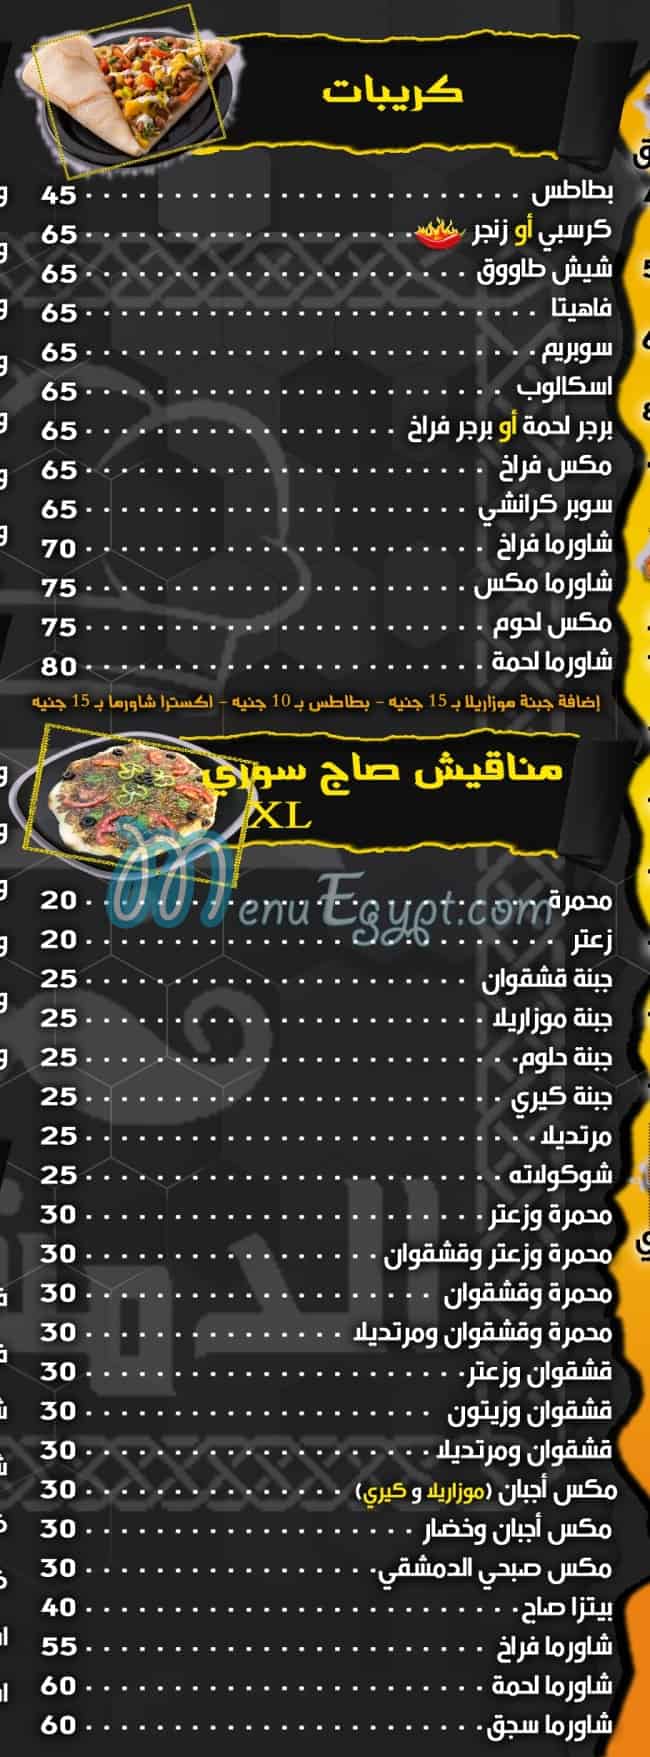 Sobhy El Demshqy online menu